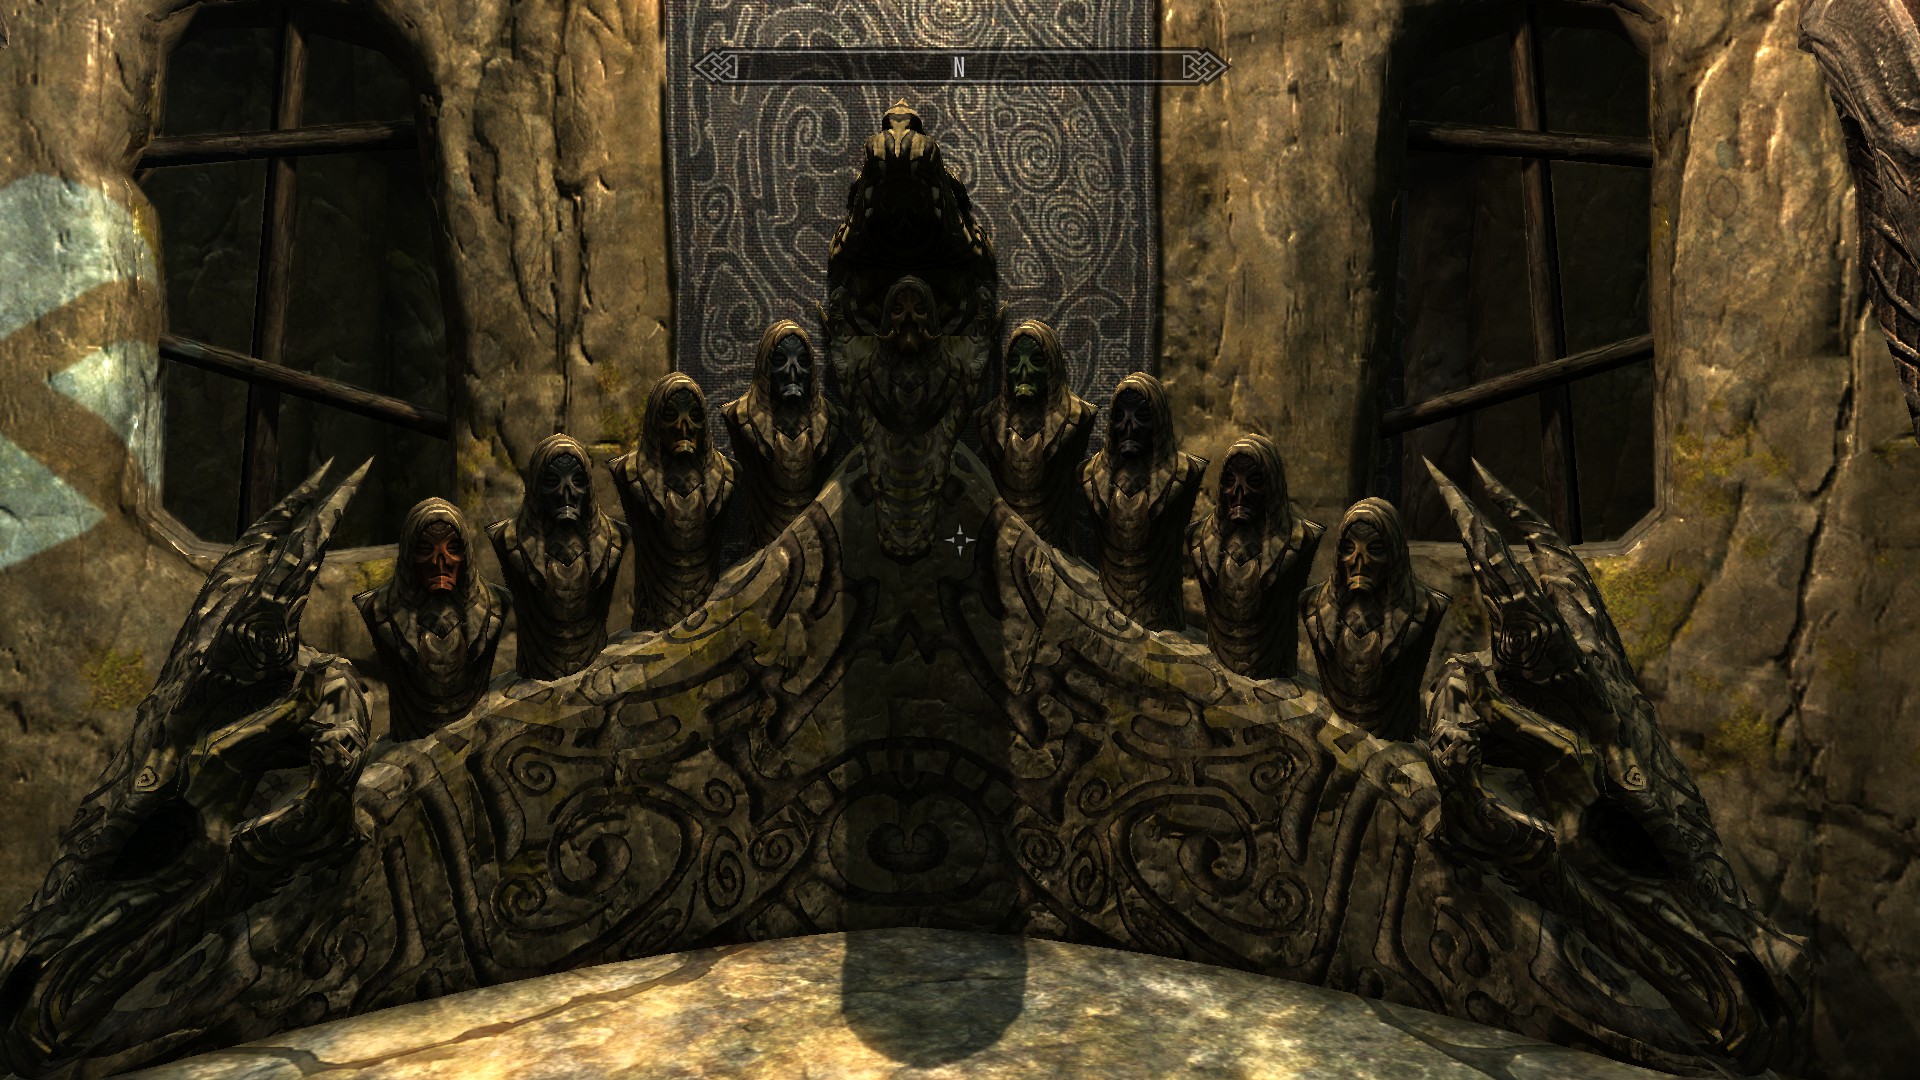 Drachenpriestermasken (Skyrim) | Elder Scrolls Wiki | FANDOM powered by